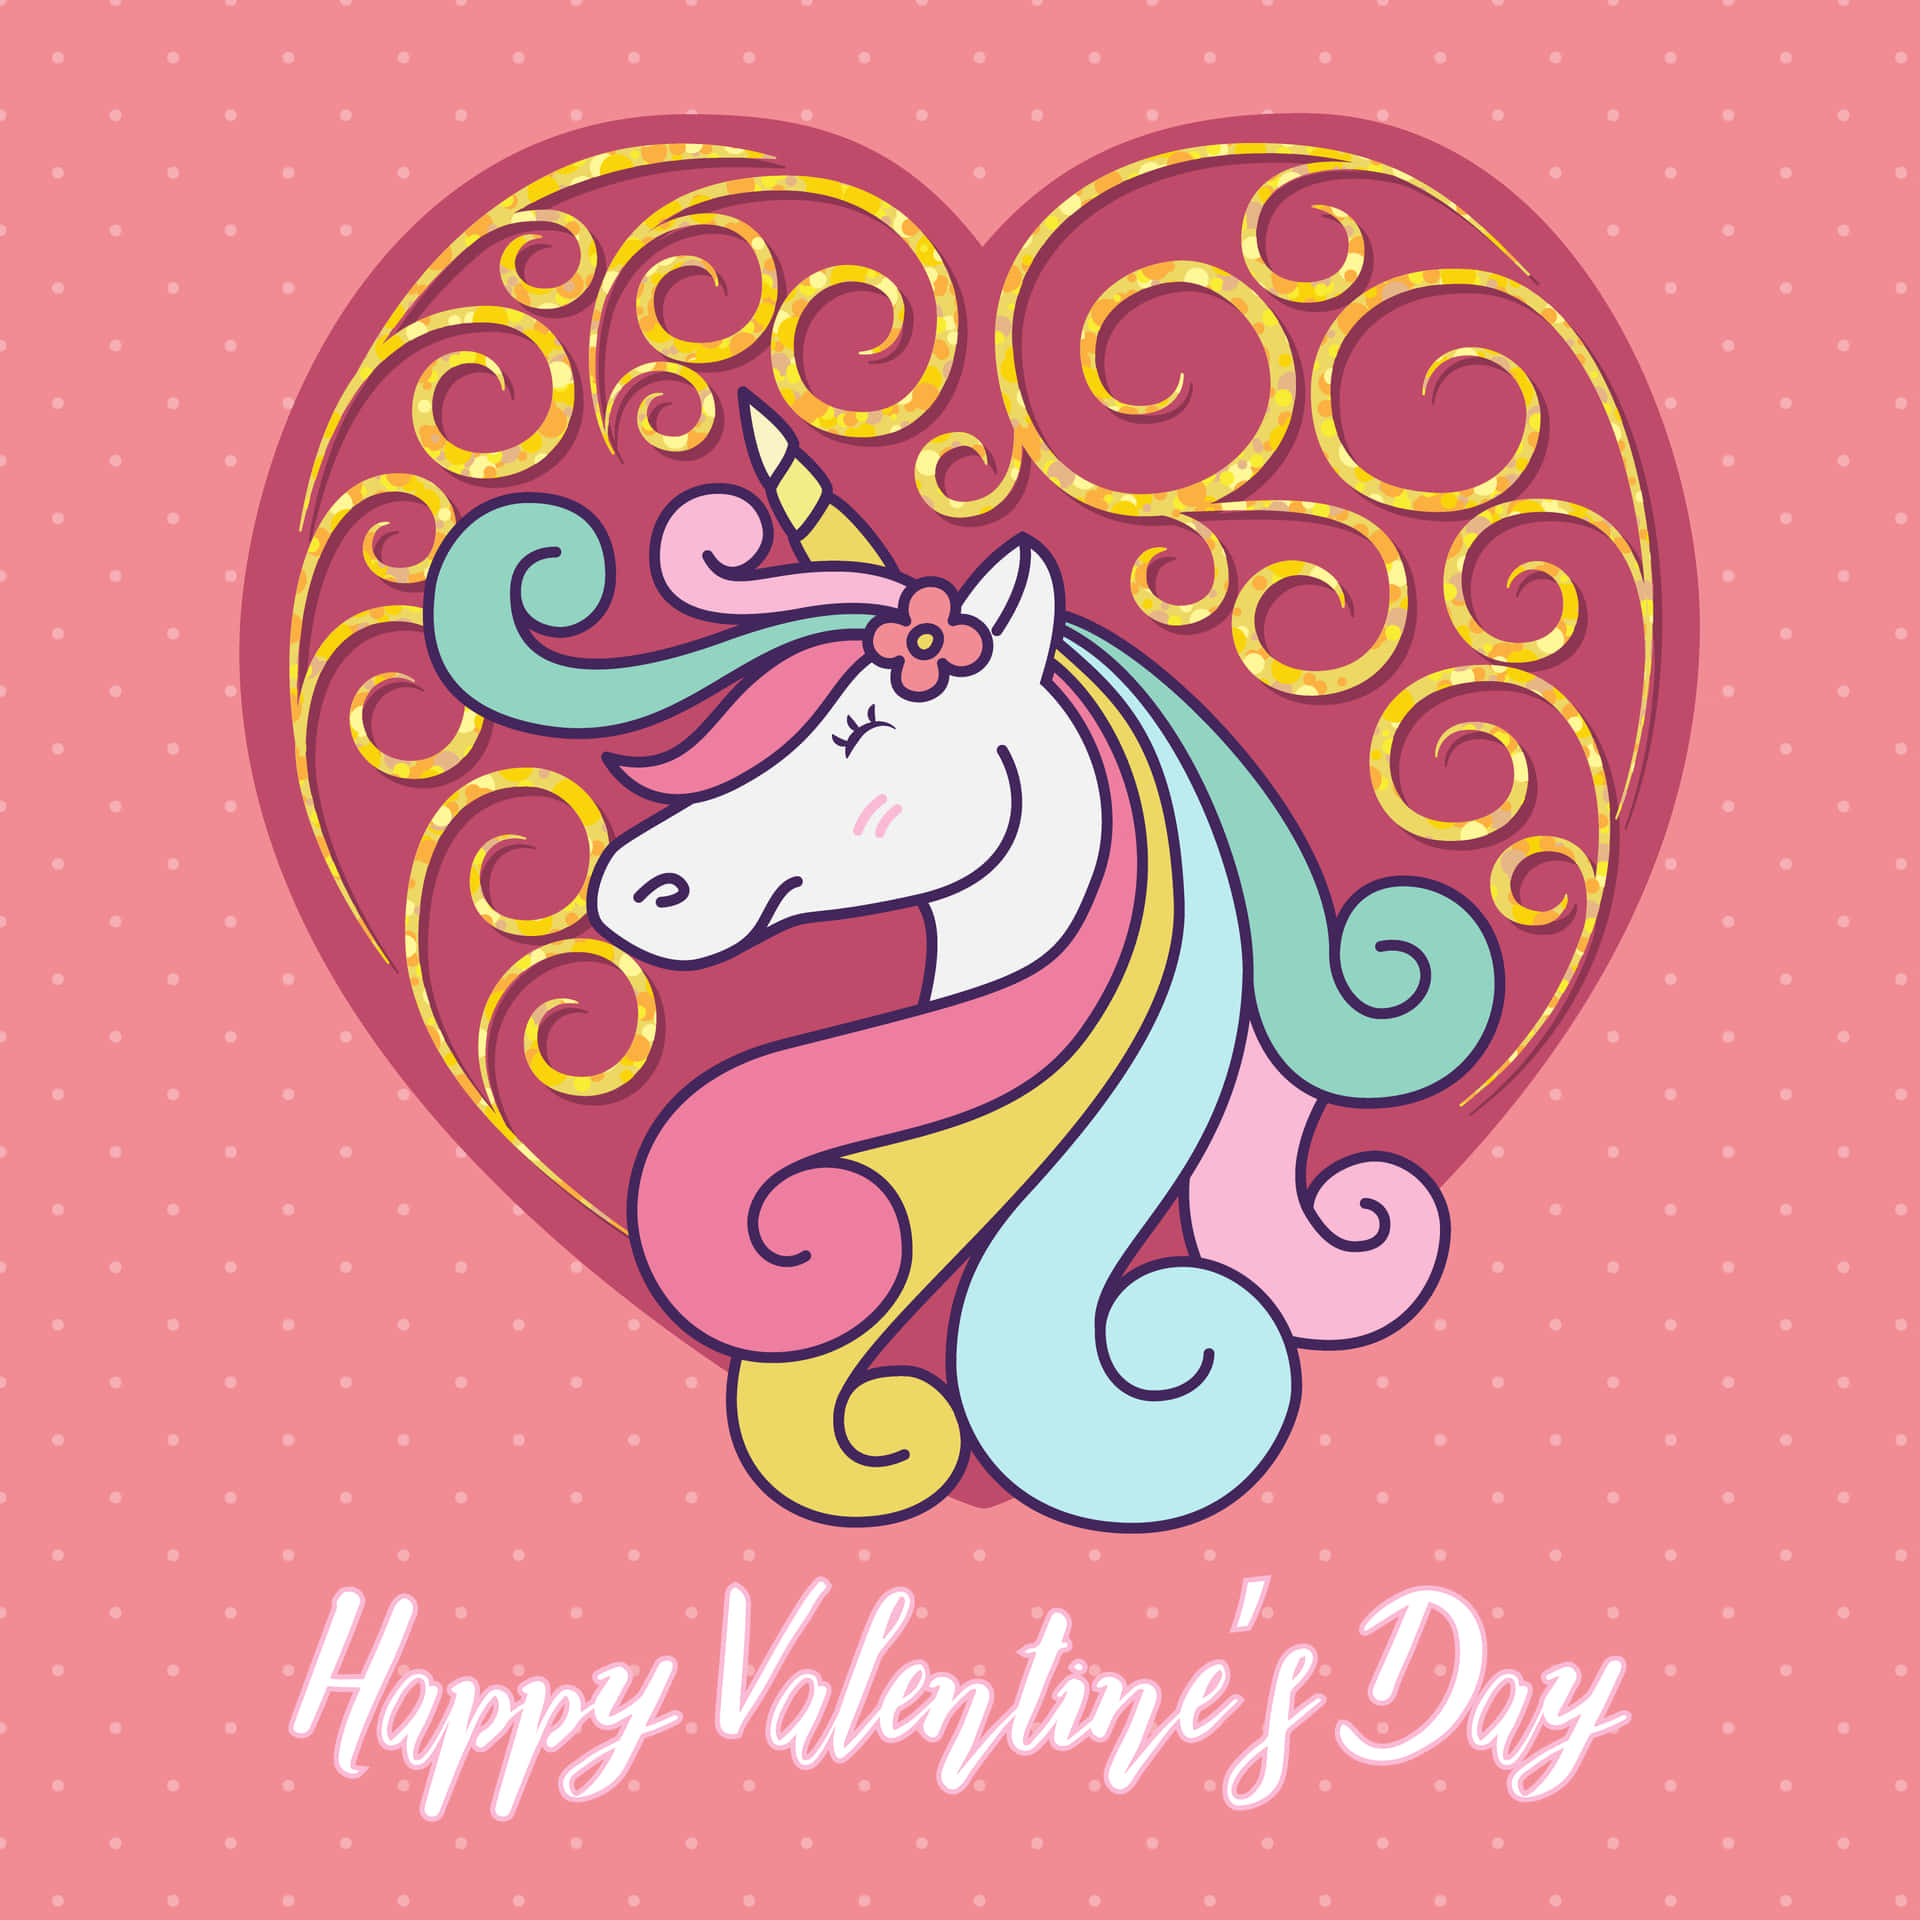 Valentine's Day Card With Unicorn Head